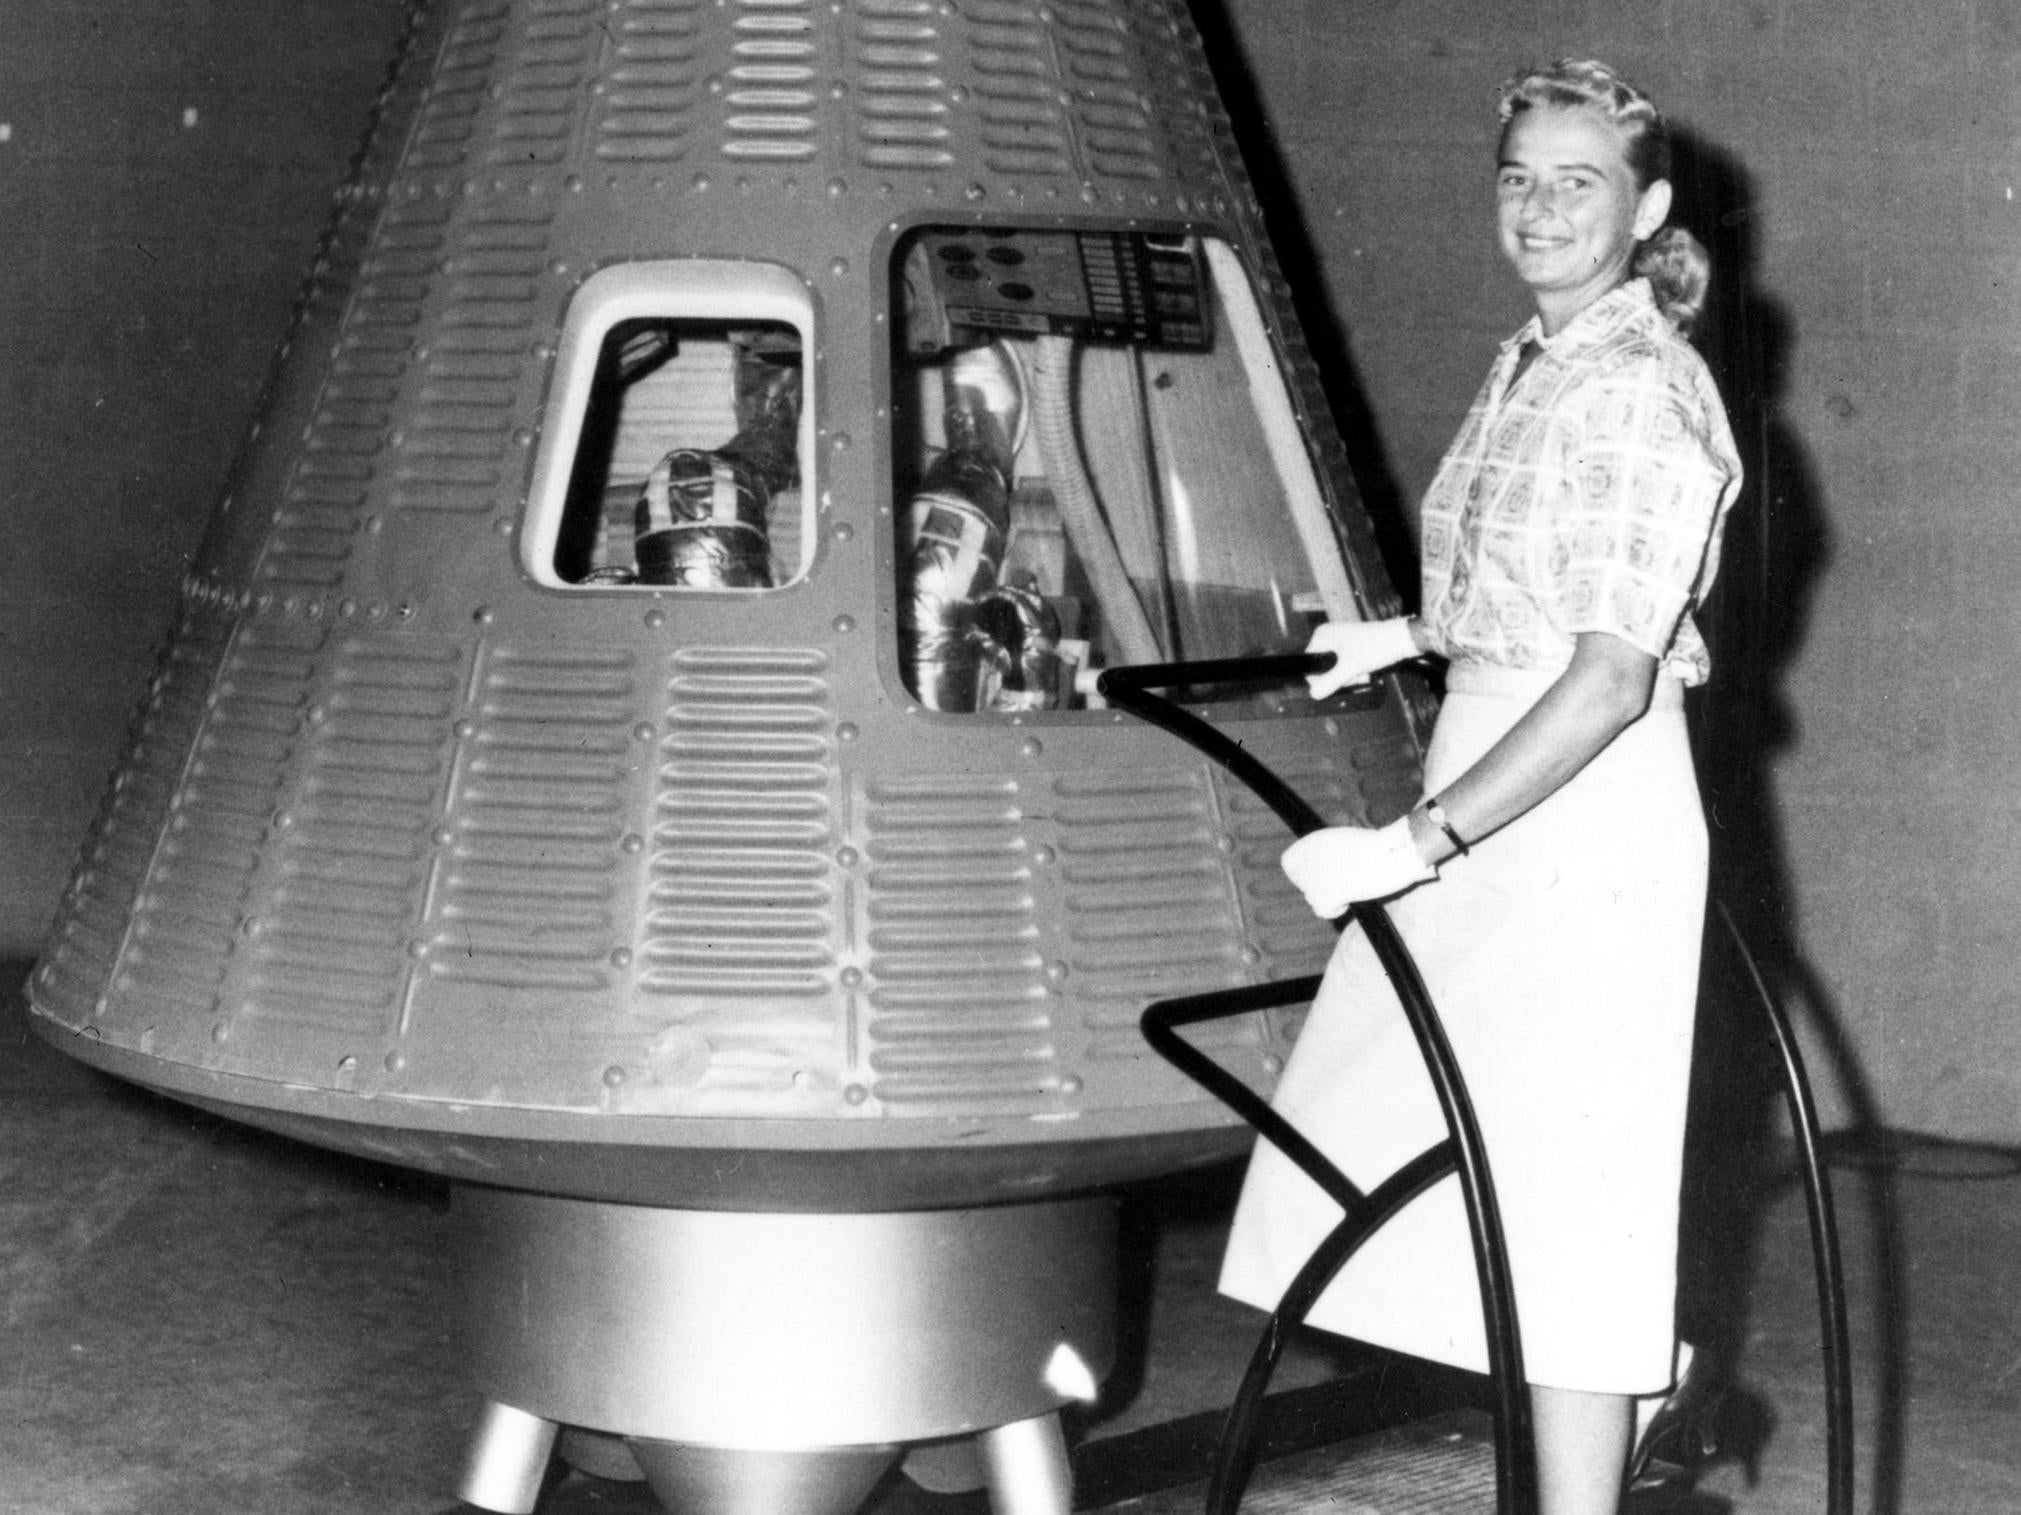 We have liftoff: Cobb next to a Mercury spaceship capsule